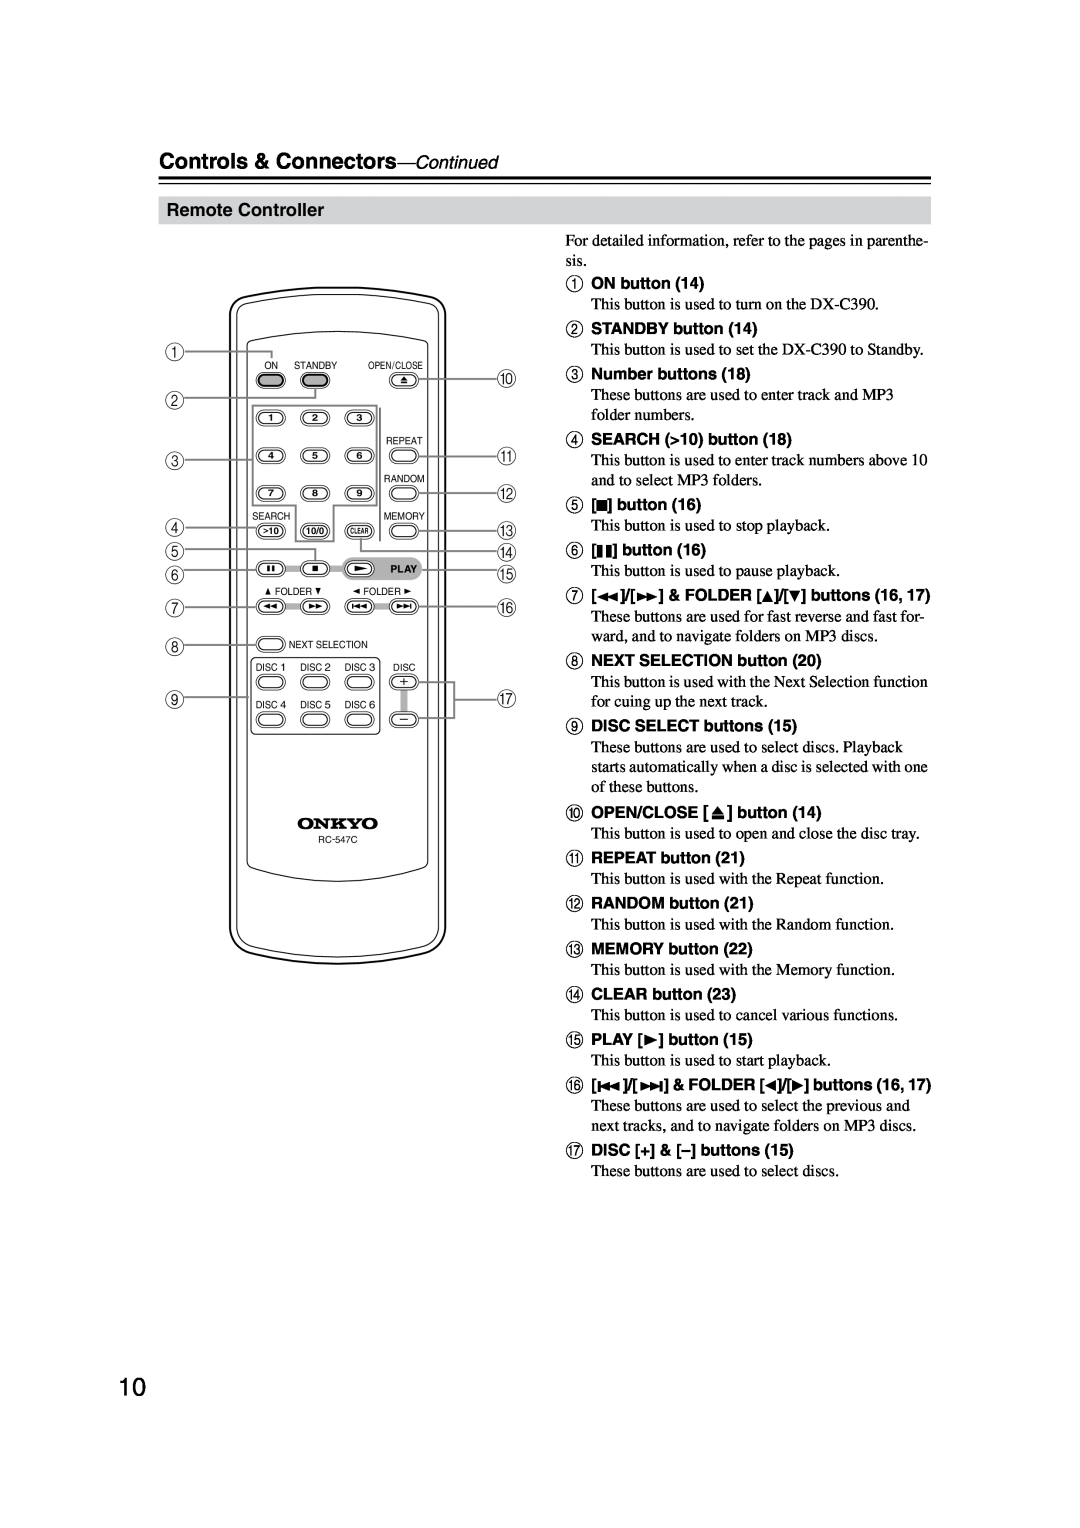 Onkyo DX-C390 instruction manual Controls & Connectors-Continued, Remote Controller 